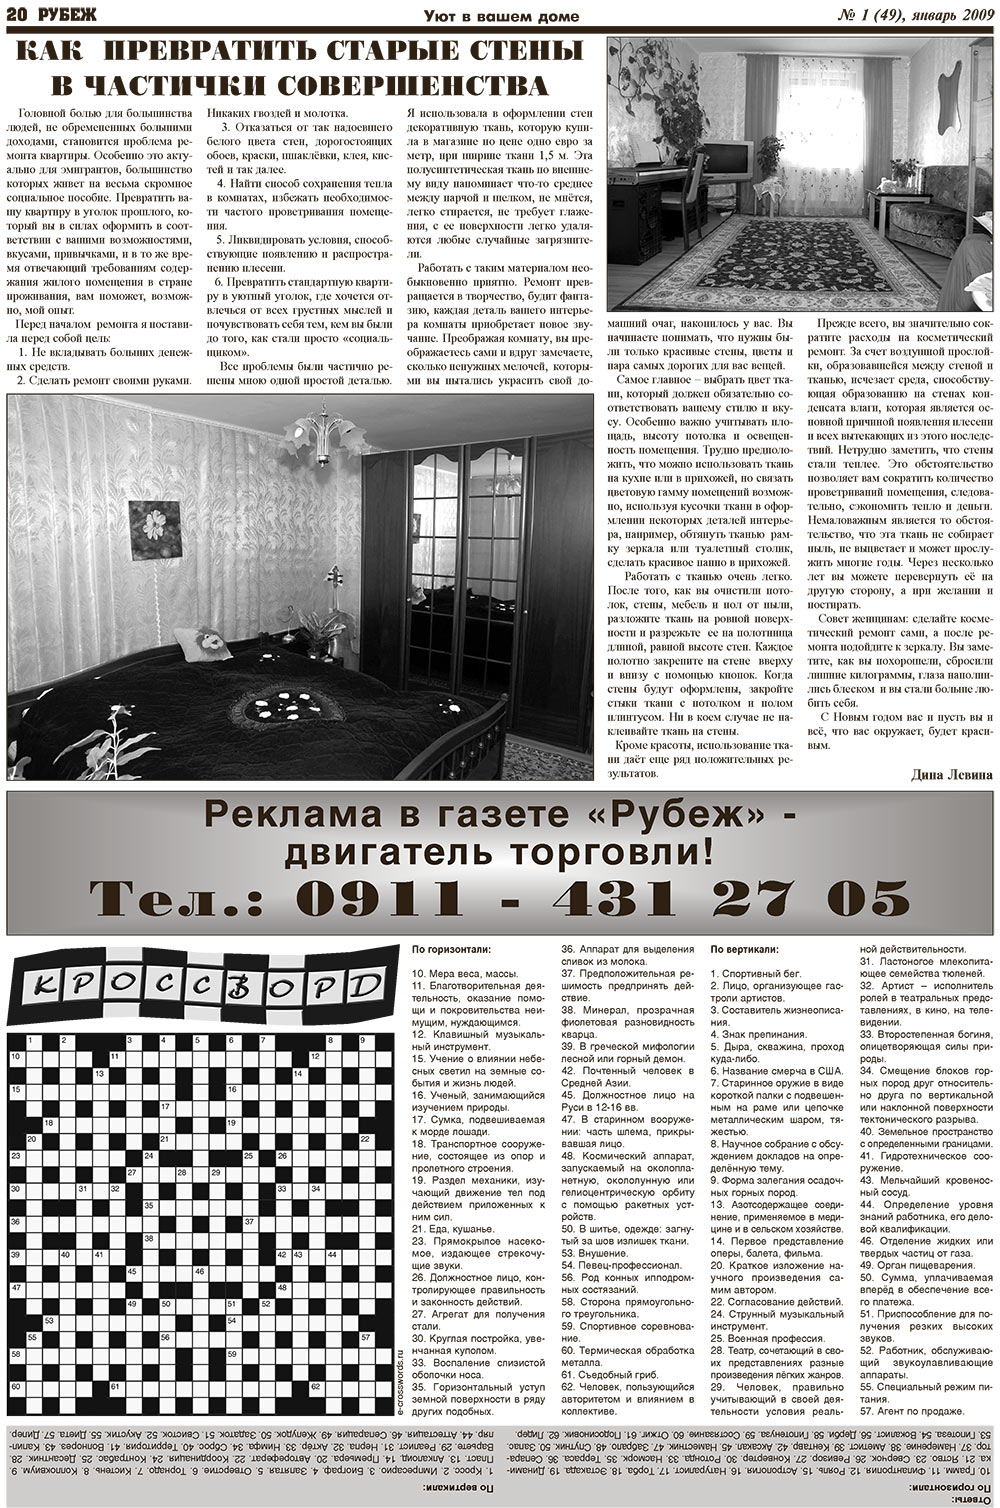 Рубеж, газета. 2009 №1 стр.20